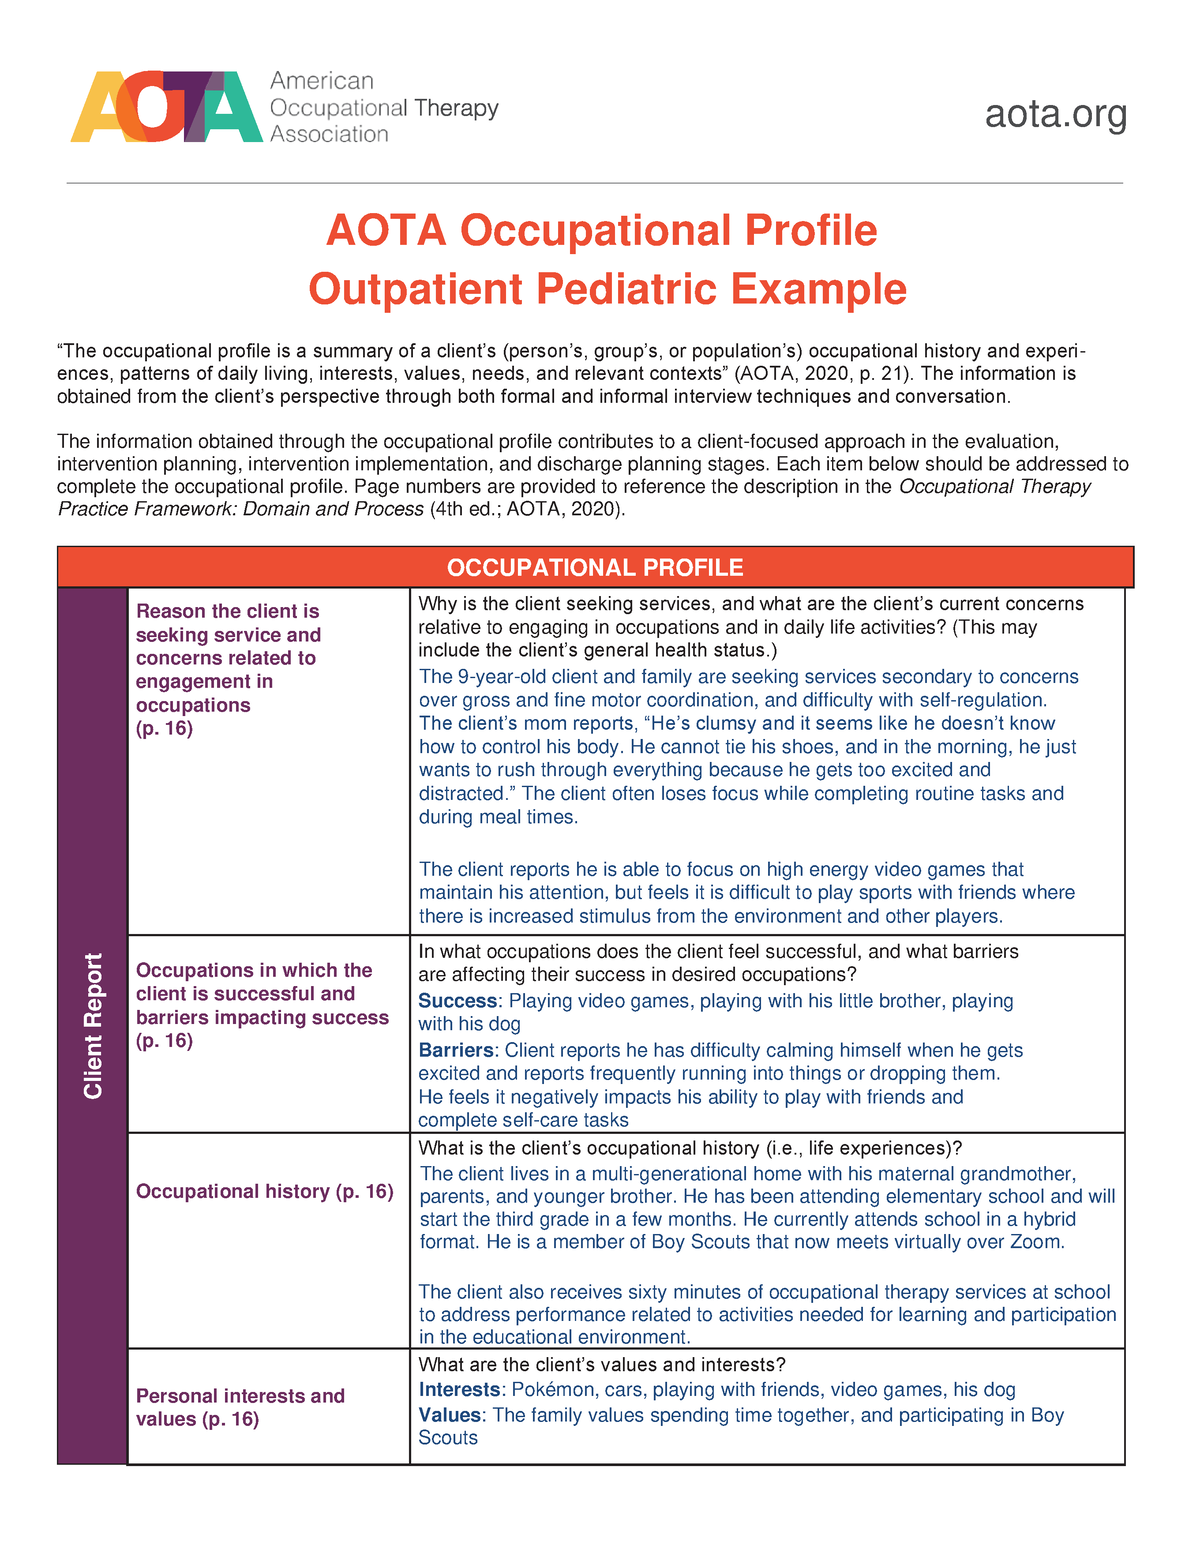 outpatient-pediatric-occupational-profile-example-aota-aota